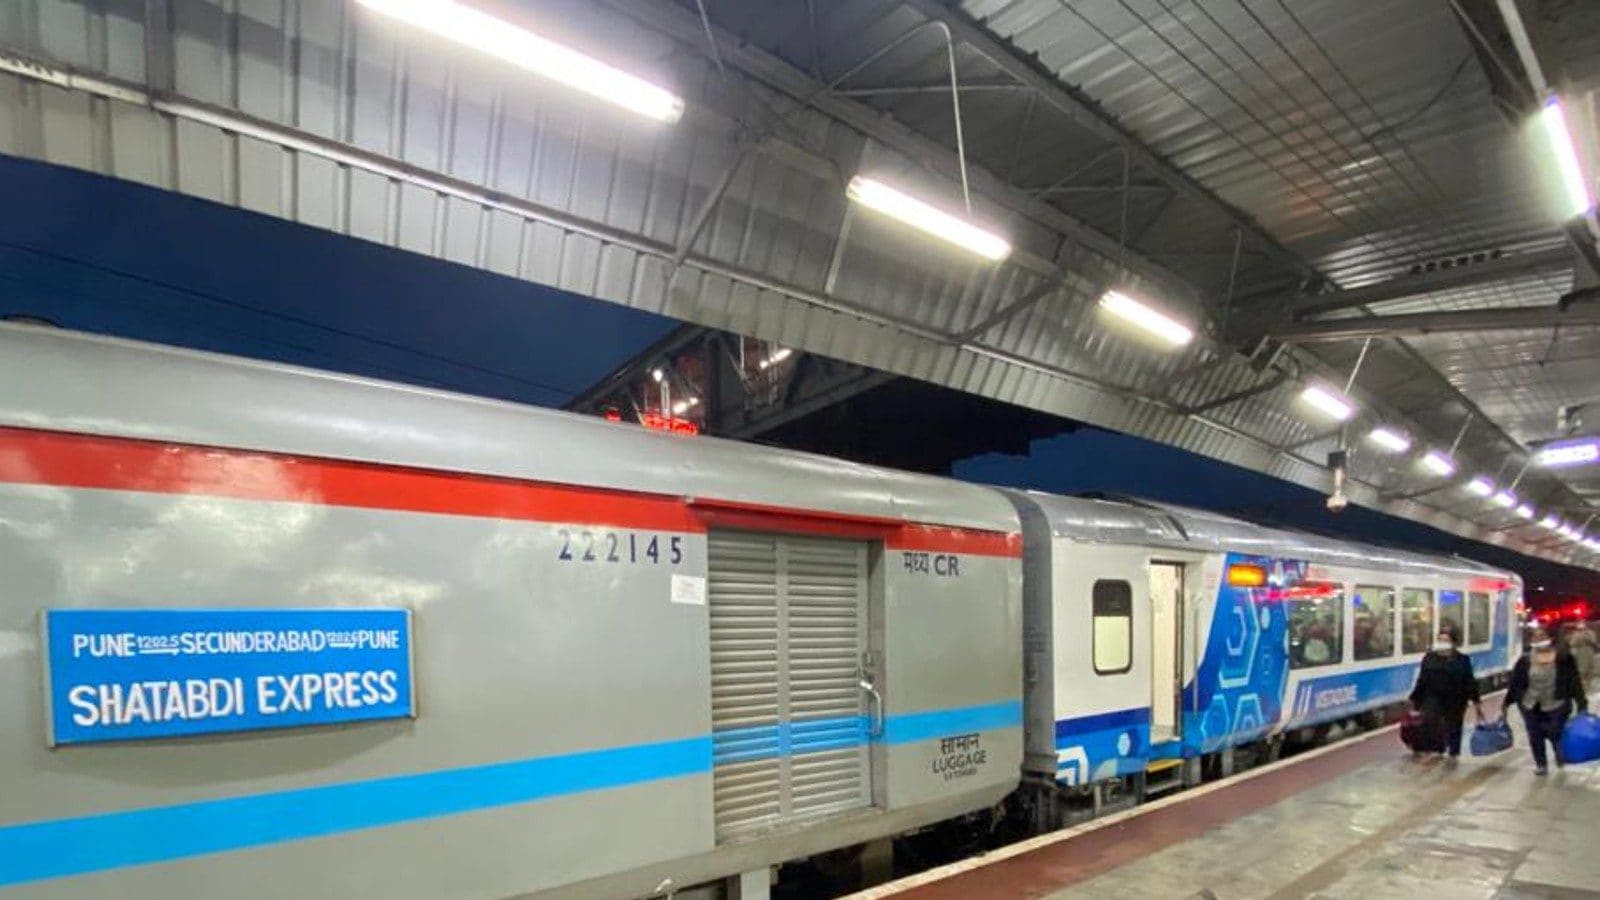 Indian Railways Adds Vistadome Coach in Pune-Secunderabad Shatabdi Express,  Check Photos